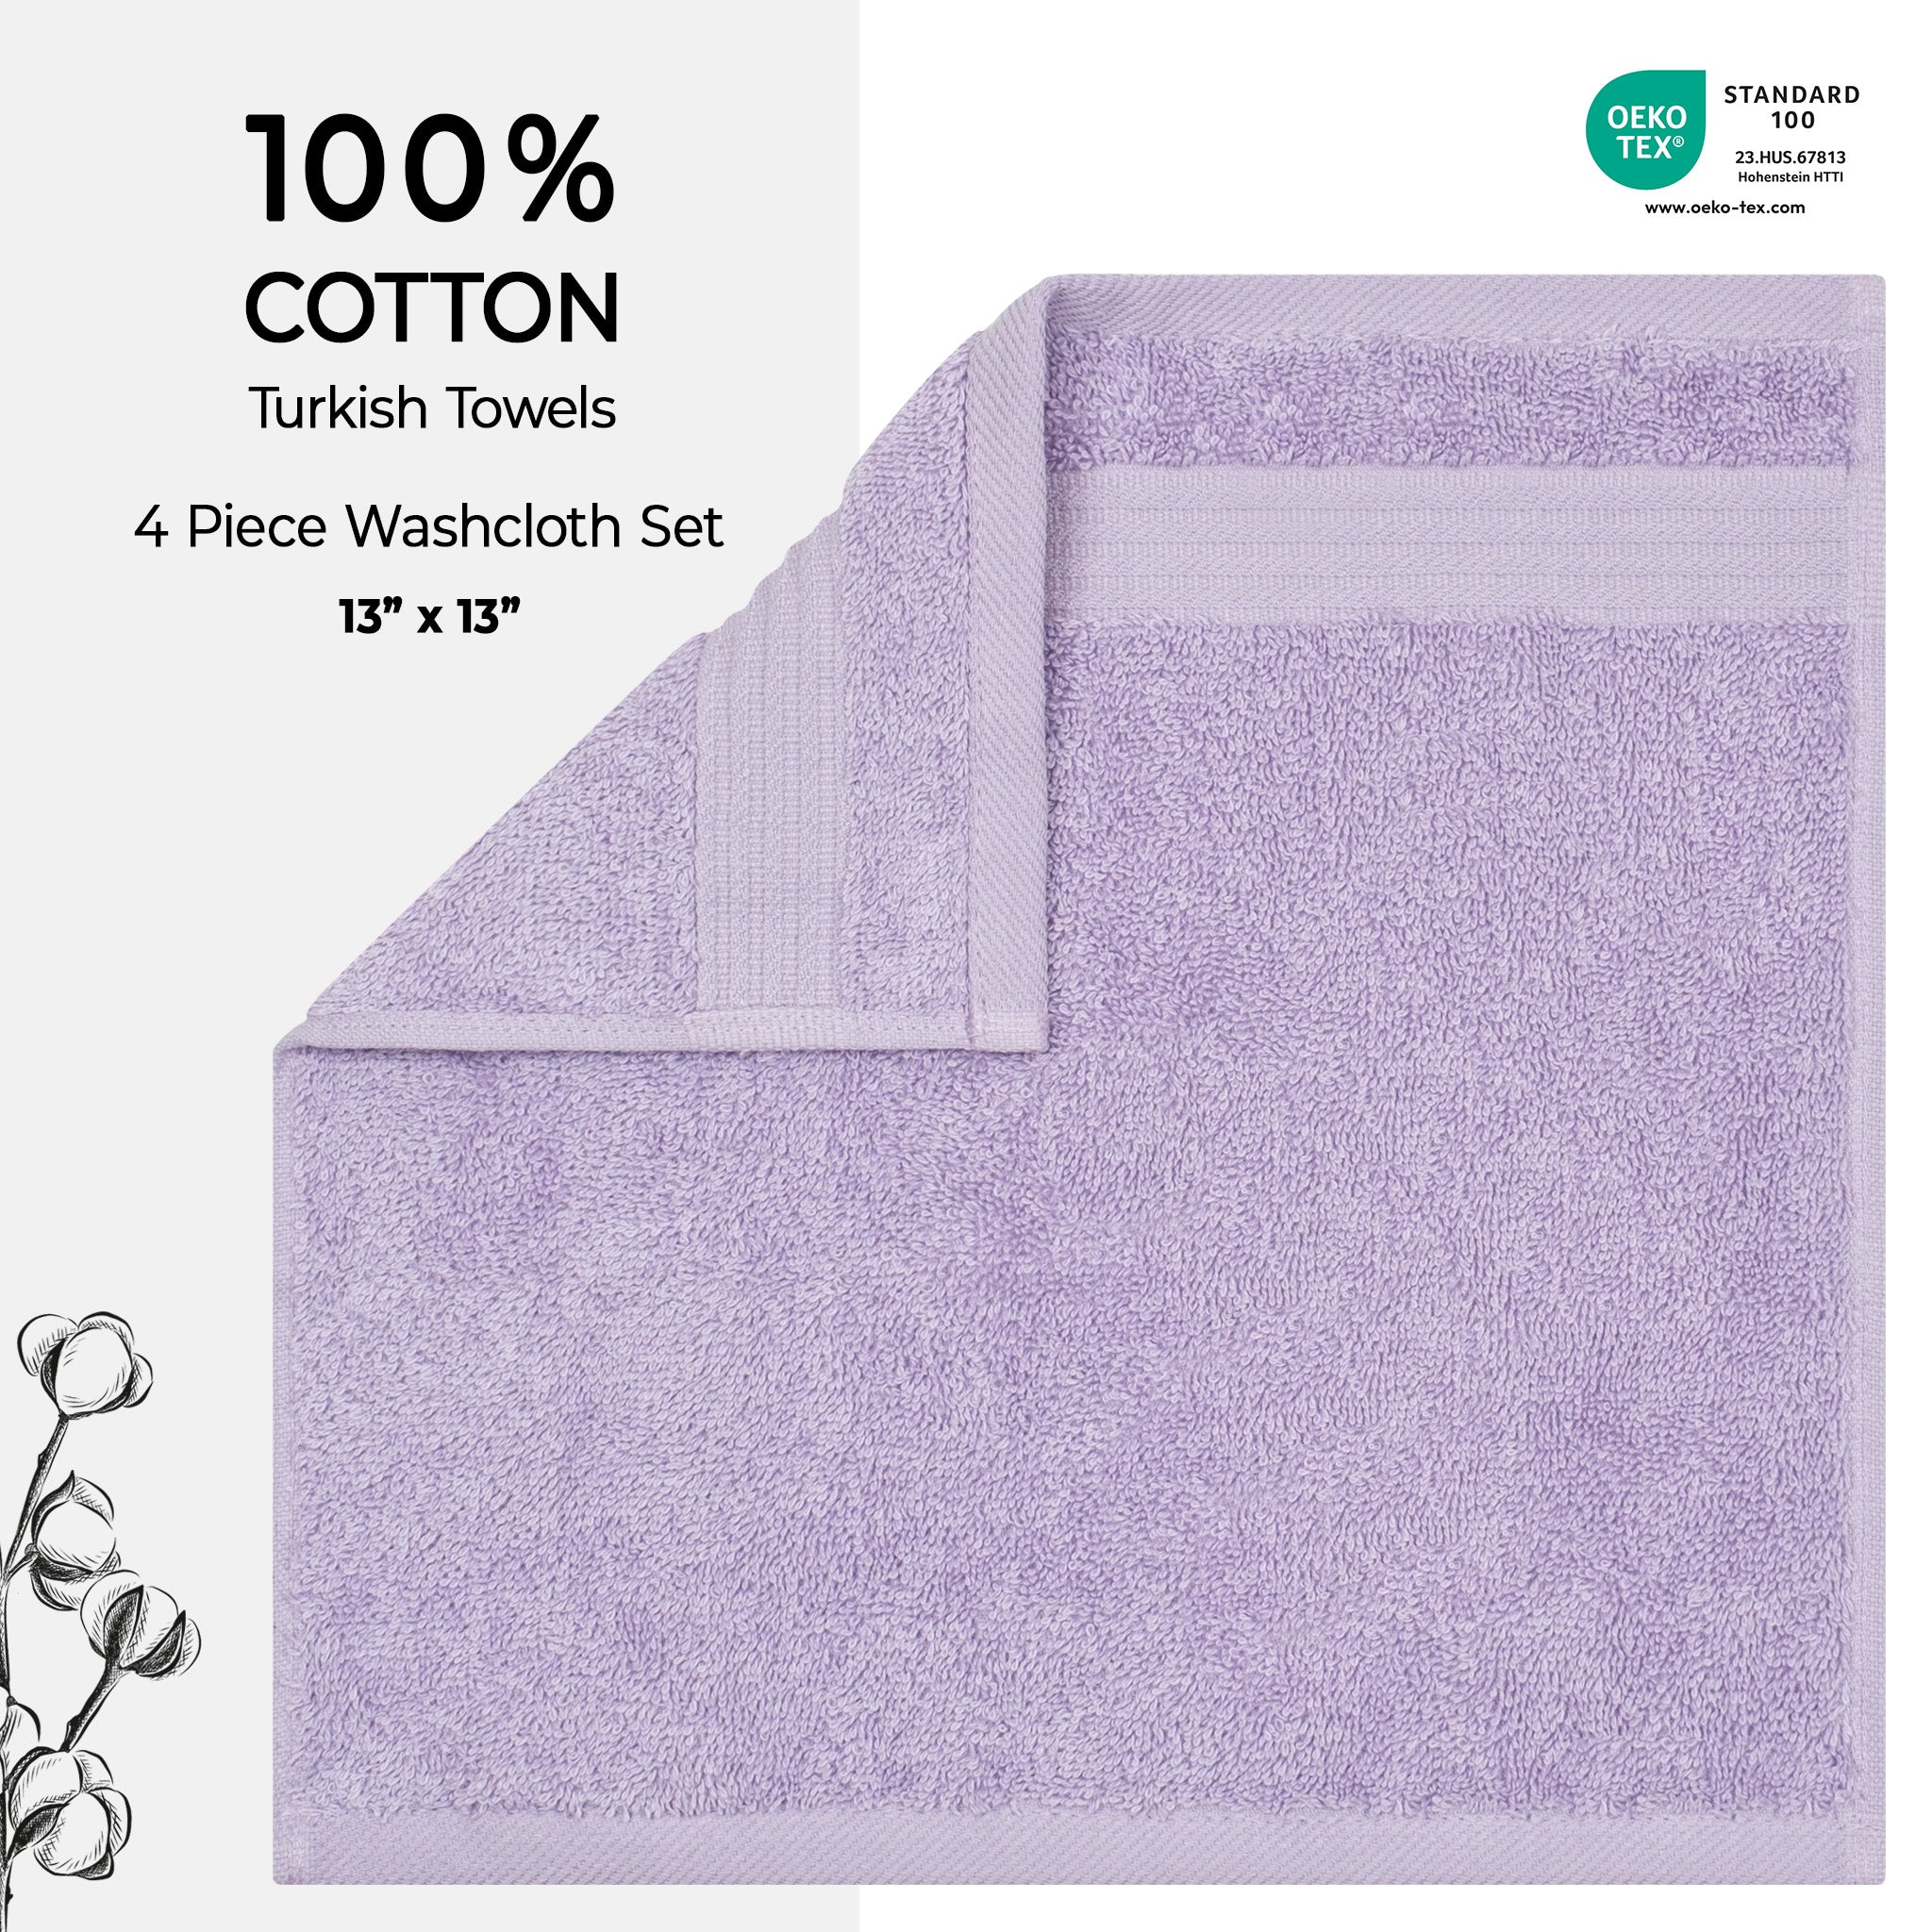 American Soft Linen Bekos 100% Cotton Turkish Towels, 4 Piece Washcloth Towel Set -lilac-02